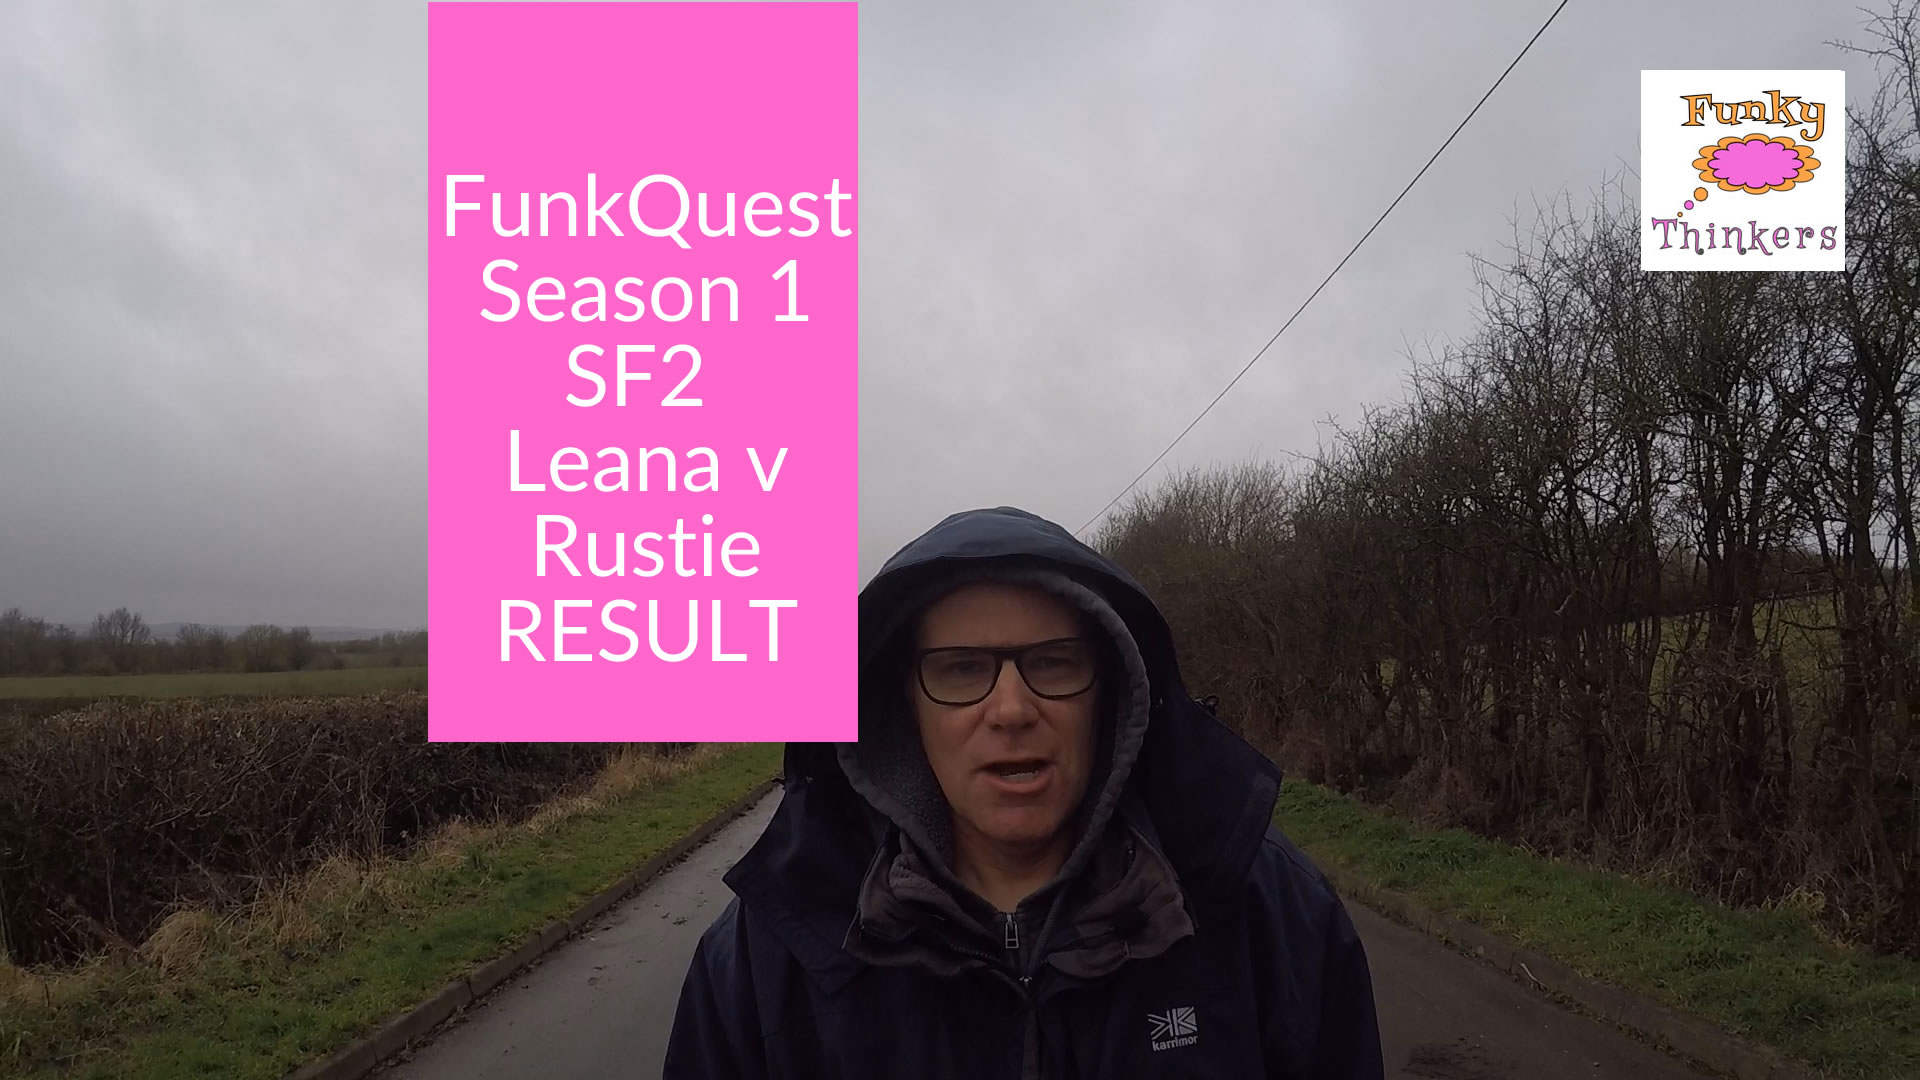 FunkQuest season 1